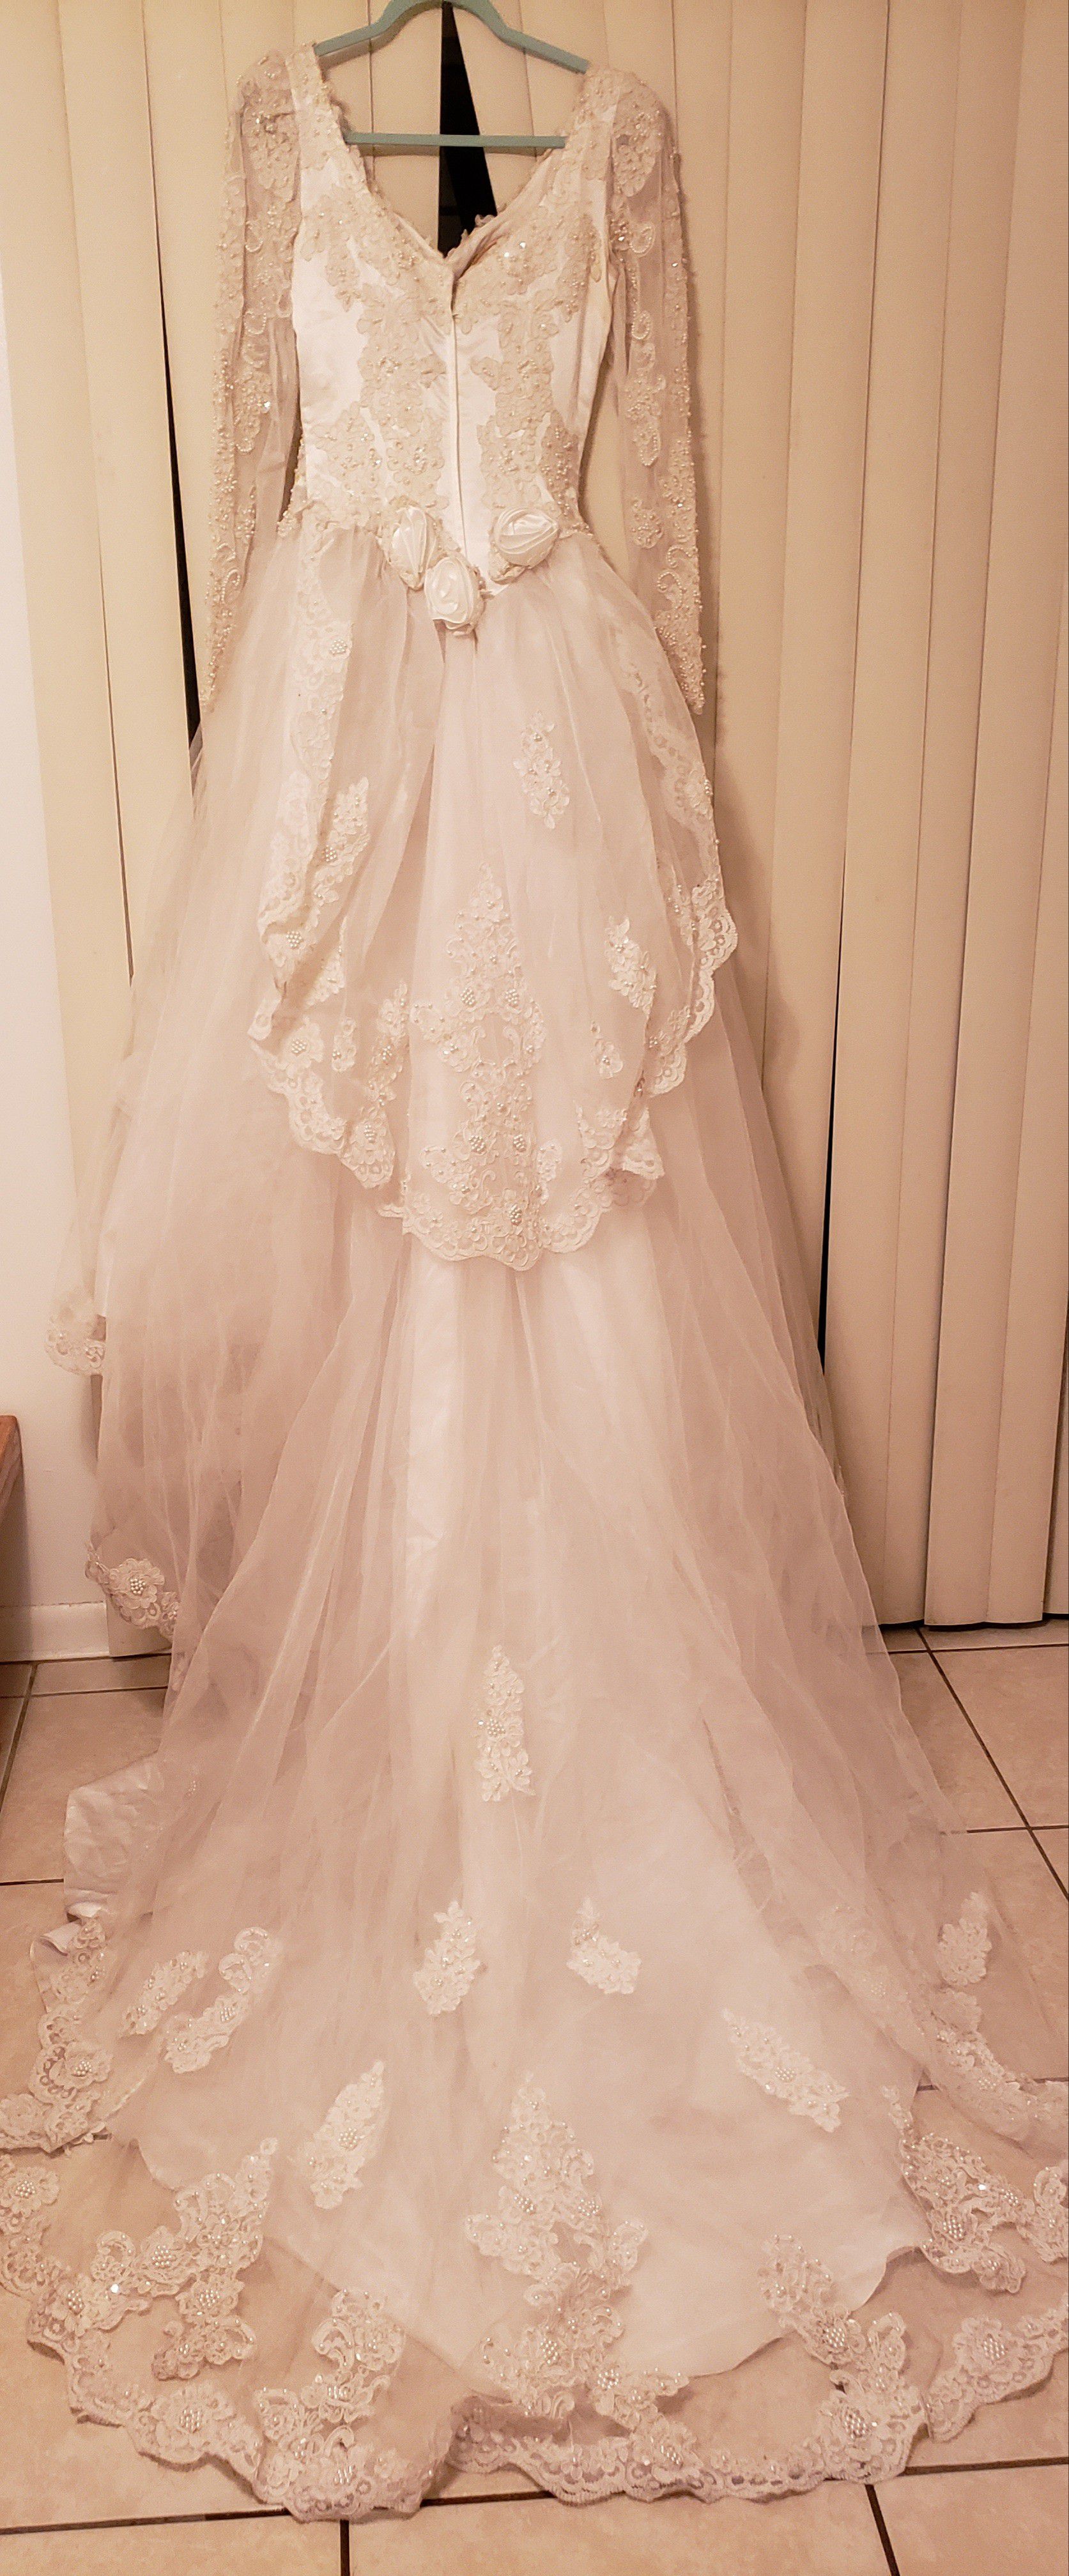 Gloria Vanderbilt Wedding Dress size 10